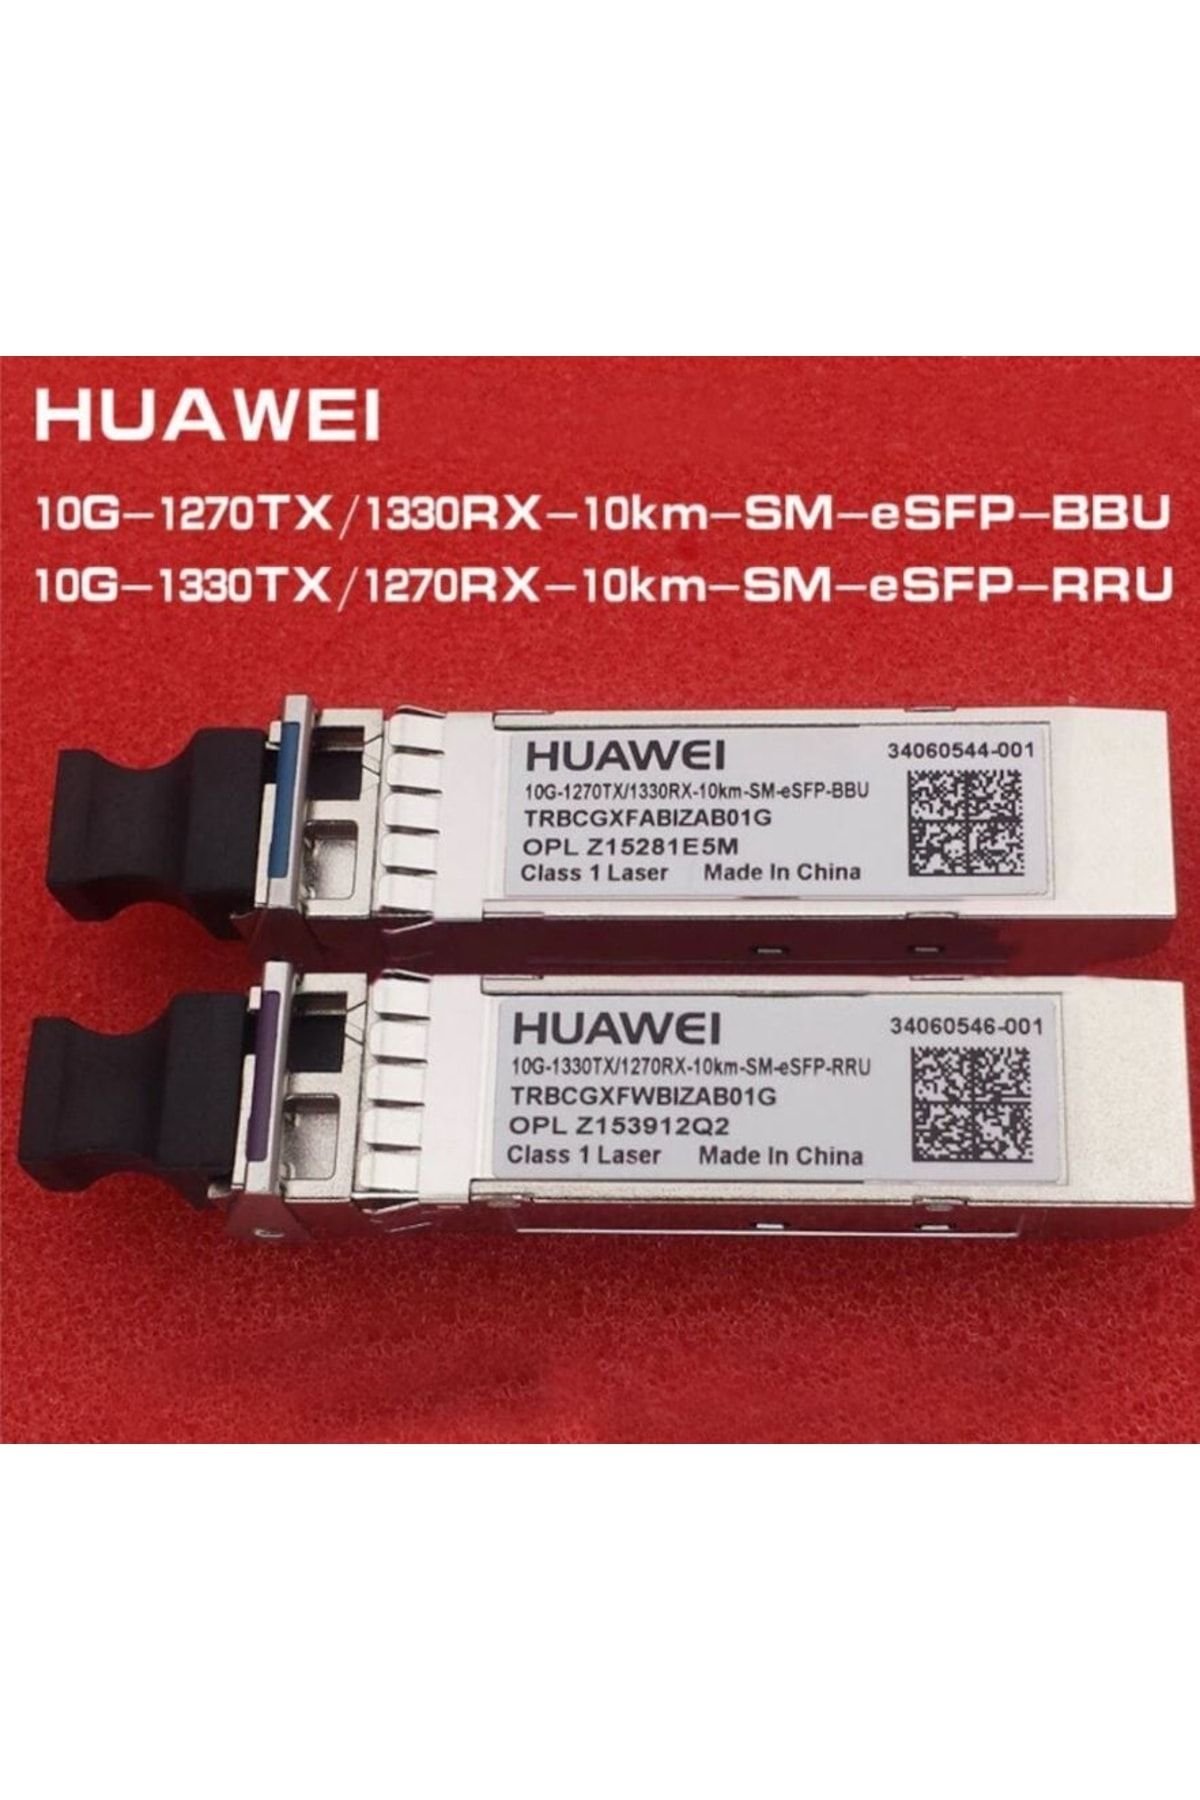 Huawei 1 Pair 2adet:1 Alici +1 Verici 10g Tek Core Sfp 10km